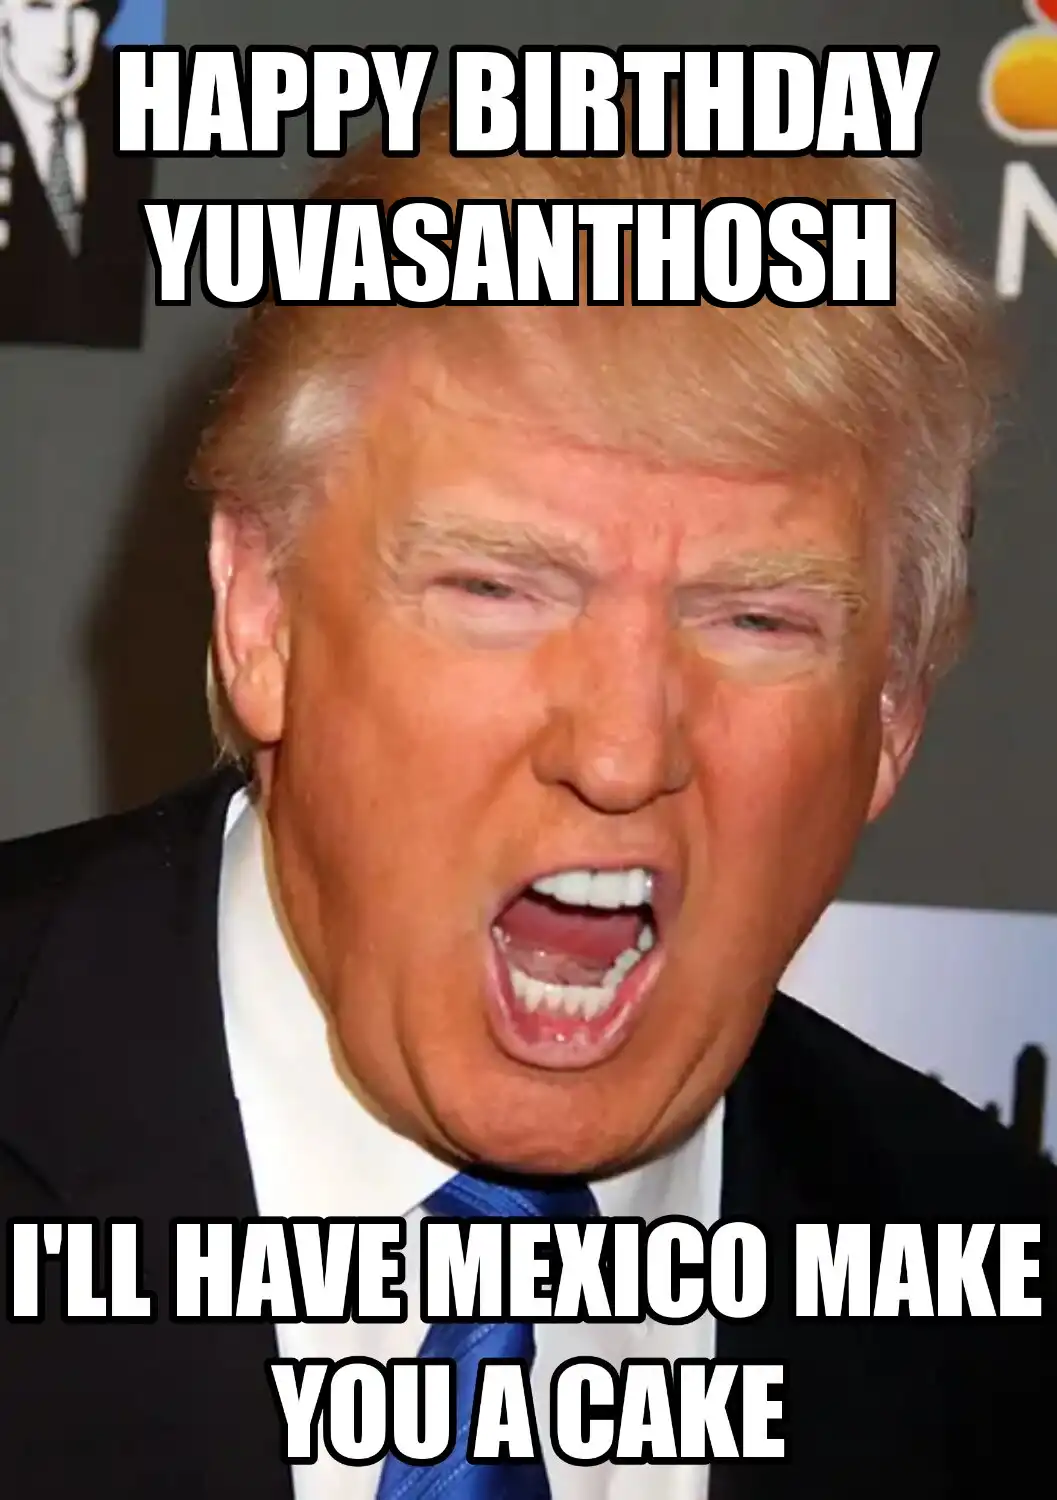 Happy Birthday Yuvasanthosh Mexico Make You A Cake Meme